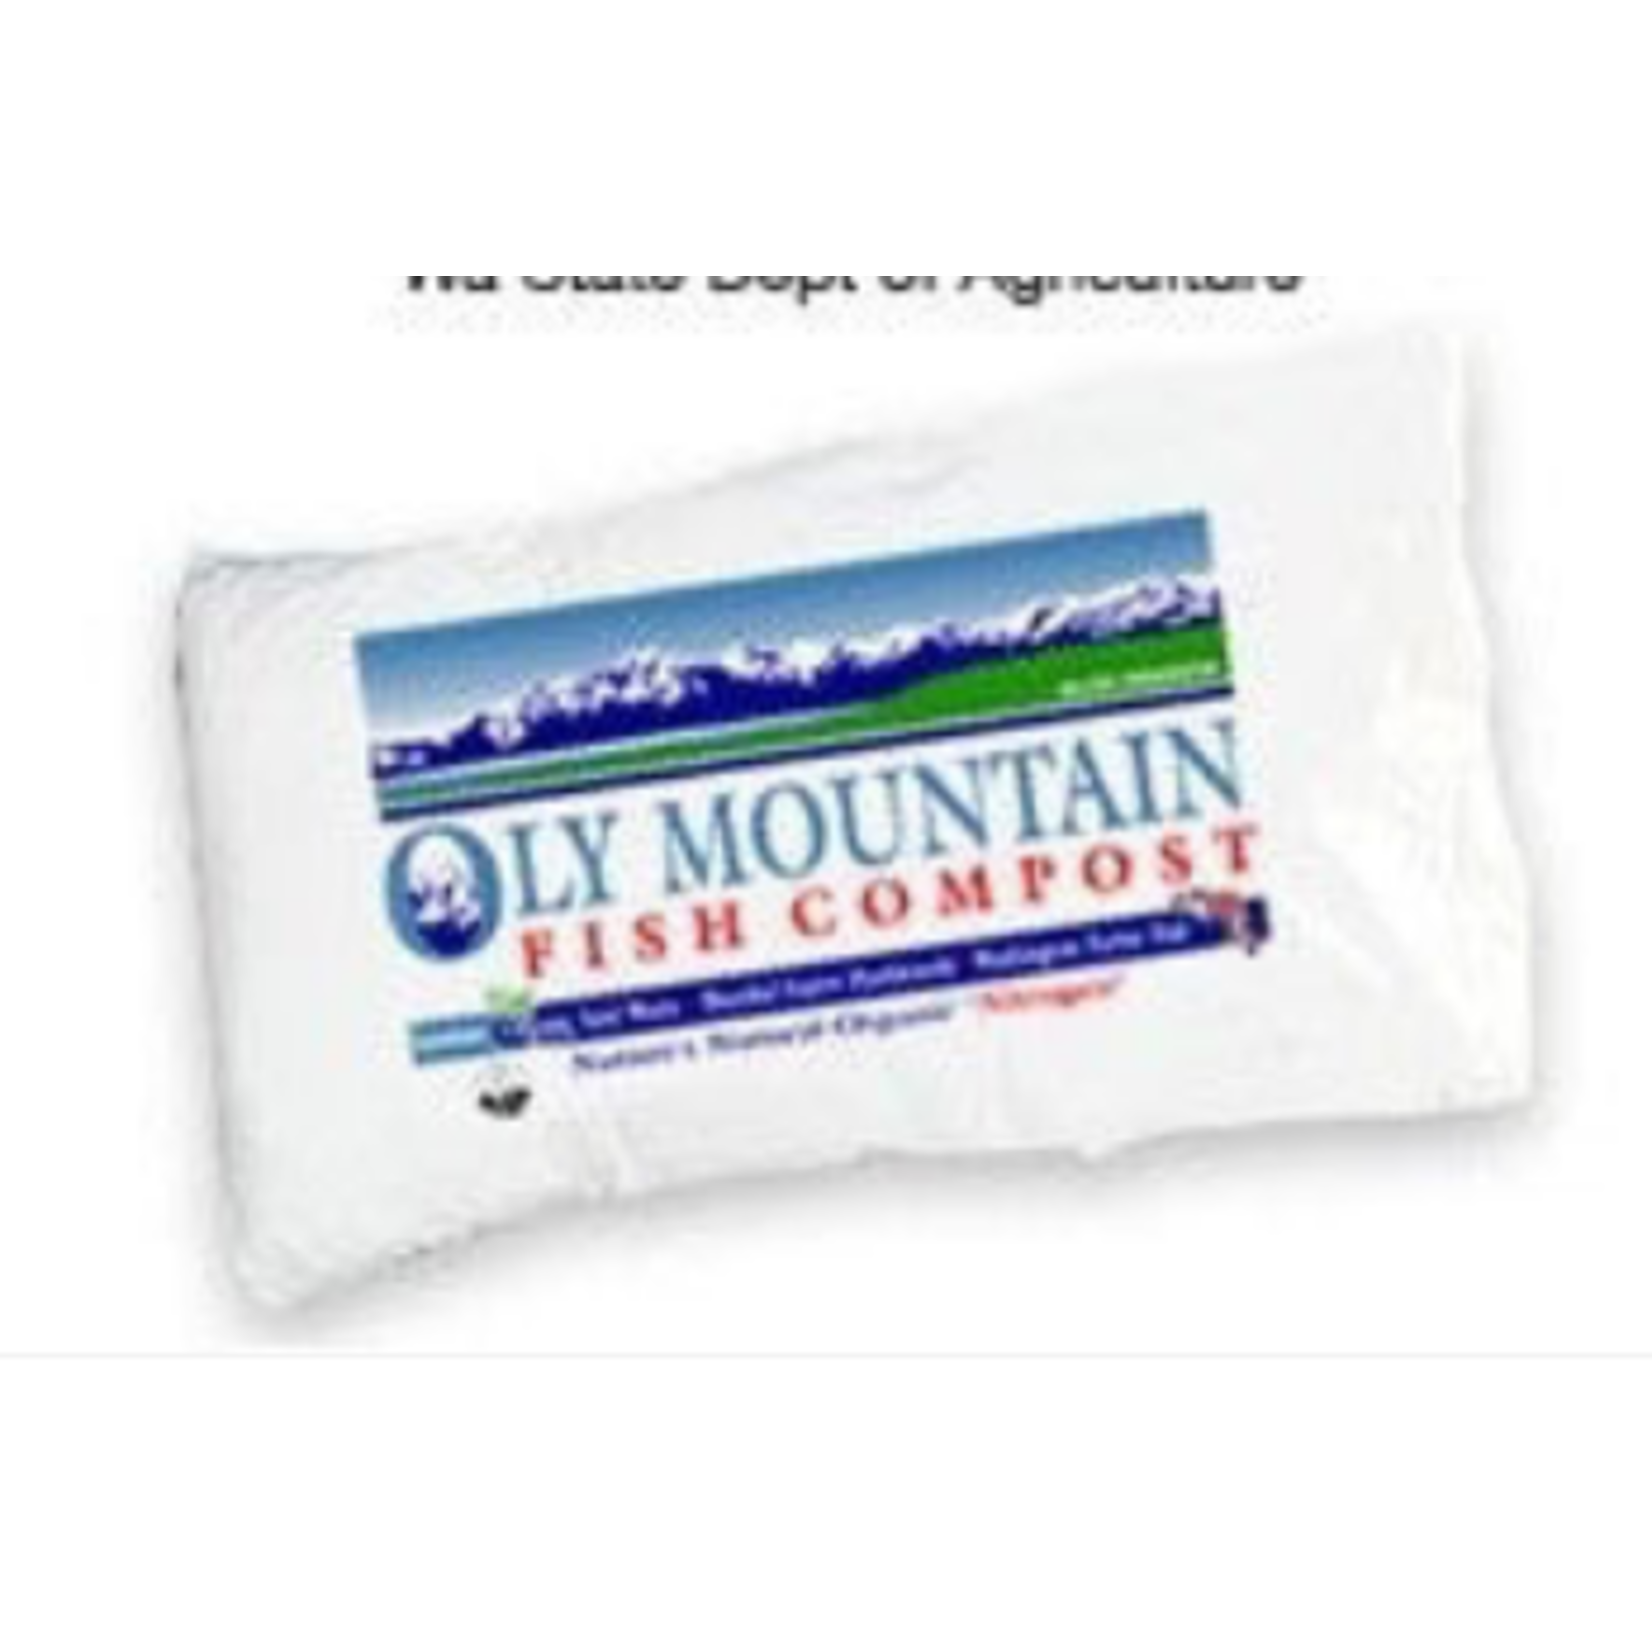 Oly Mountain BuildASoil Oly Mountain Fish Compost 2 Gallon